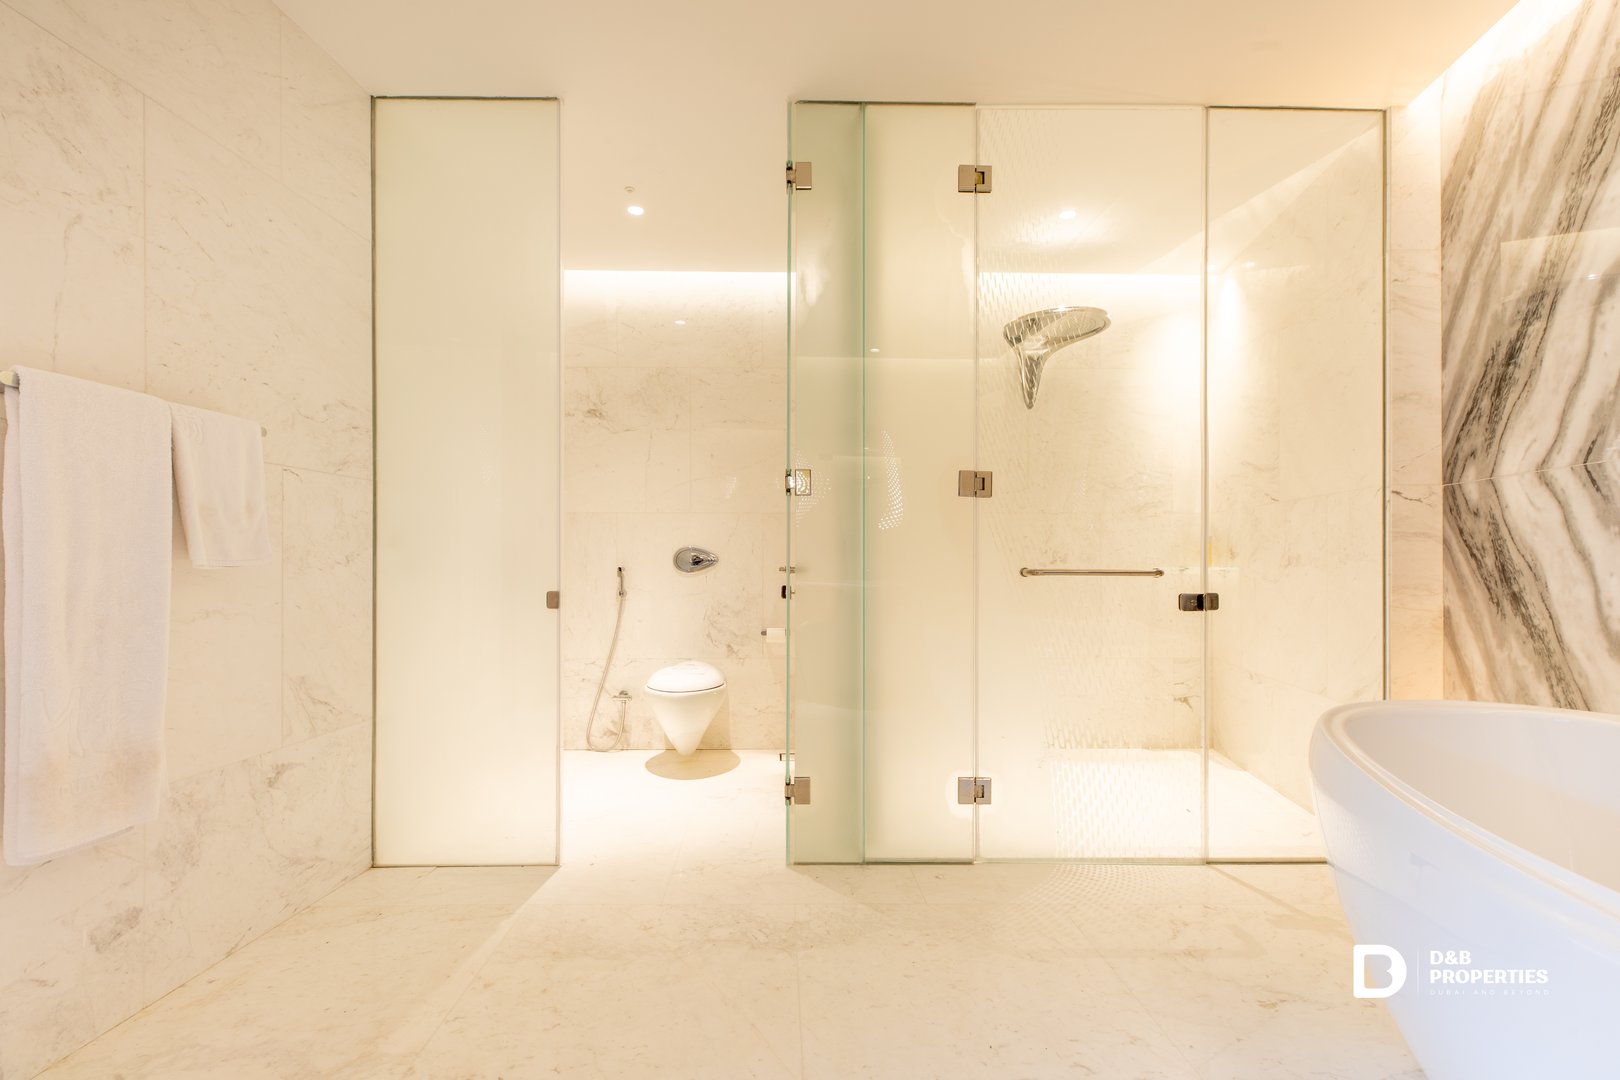 luxury lifestyle | Zaha Hadid  | Prime Location